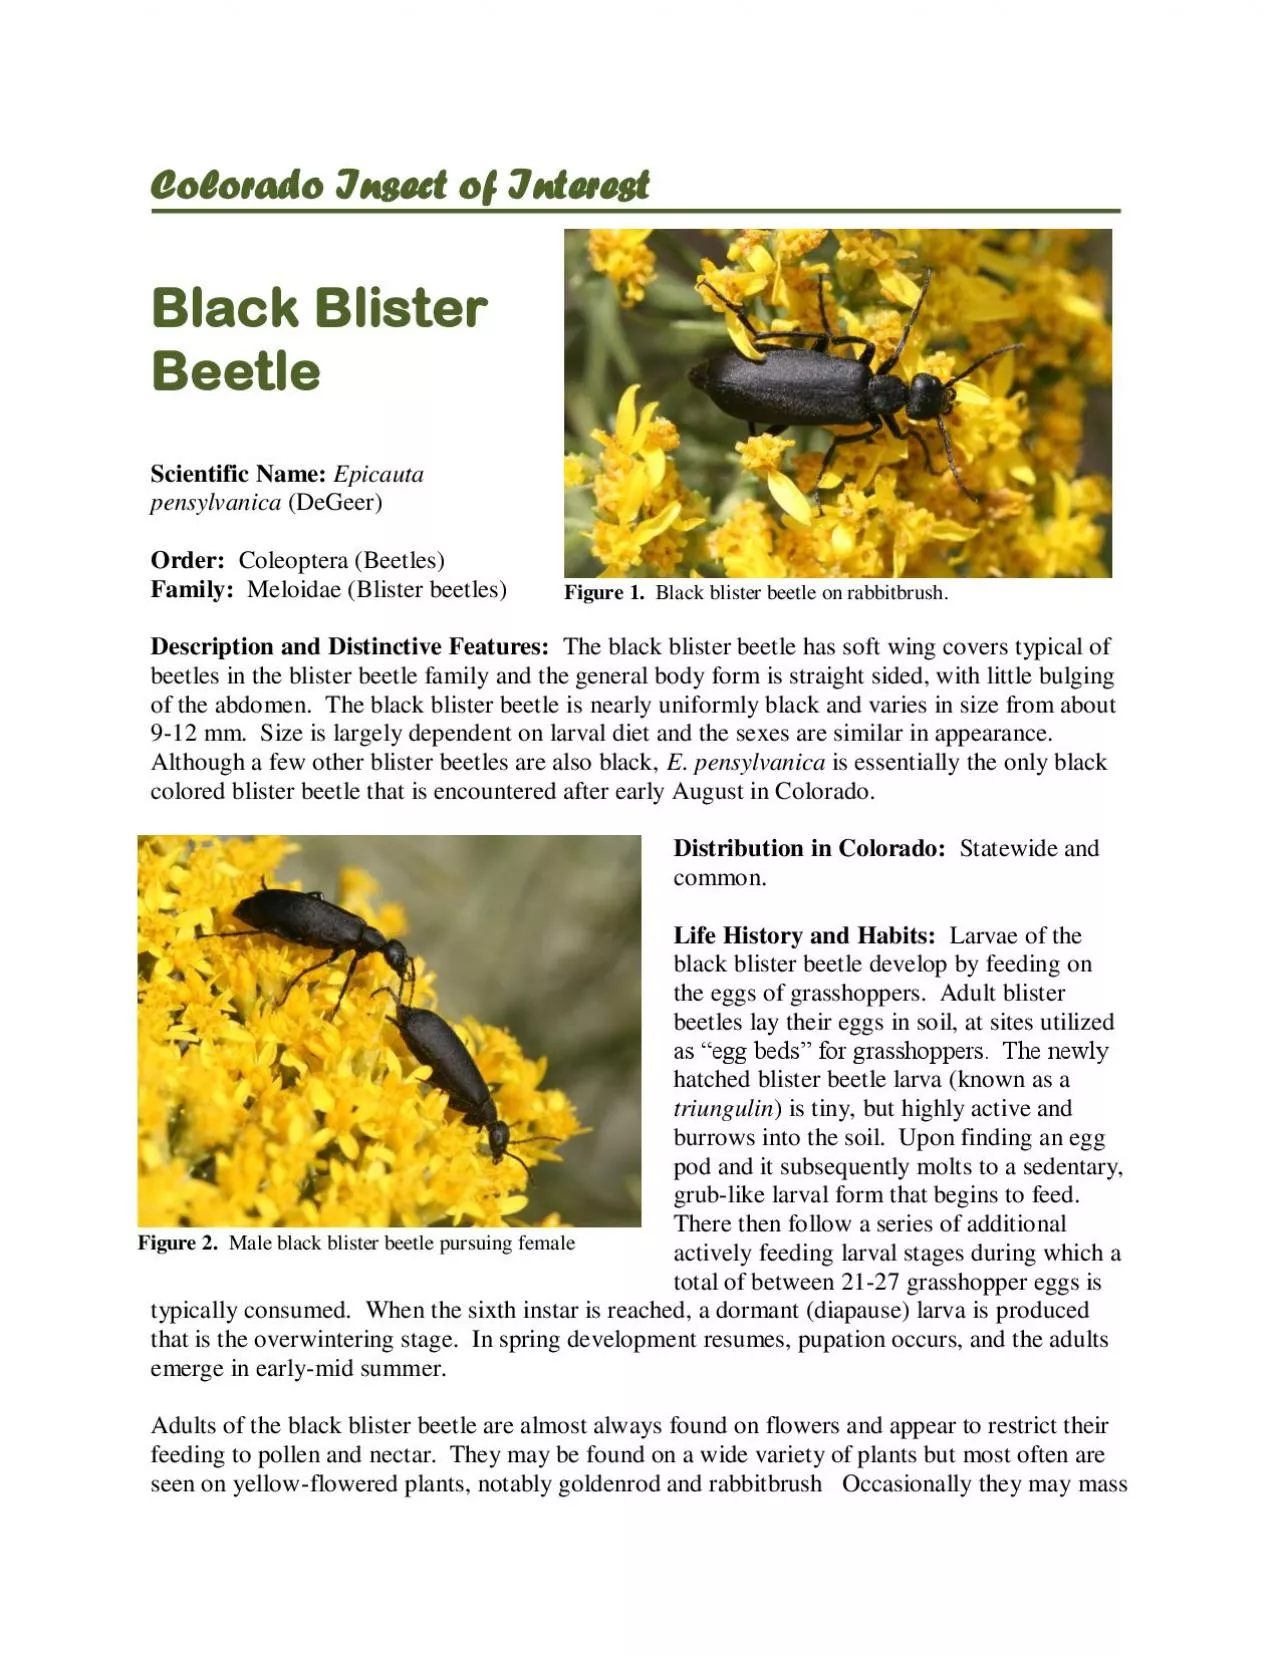 Black blister beetle on rabbitb